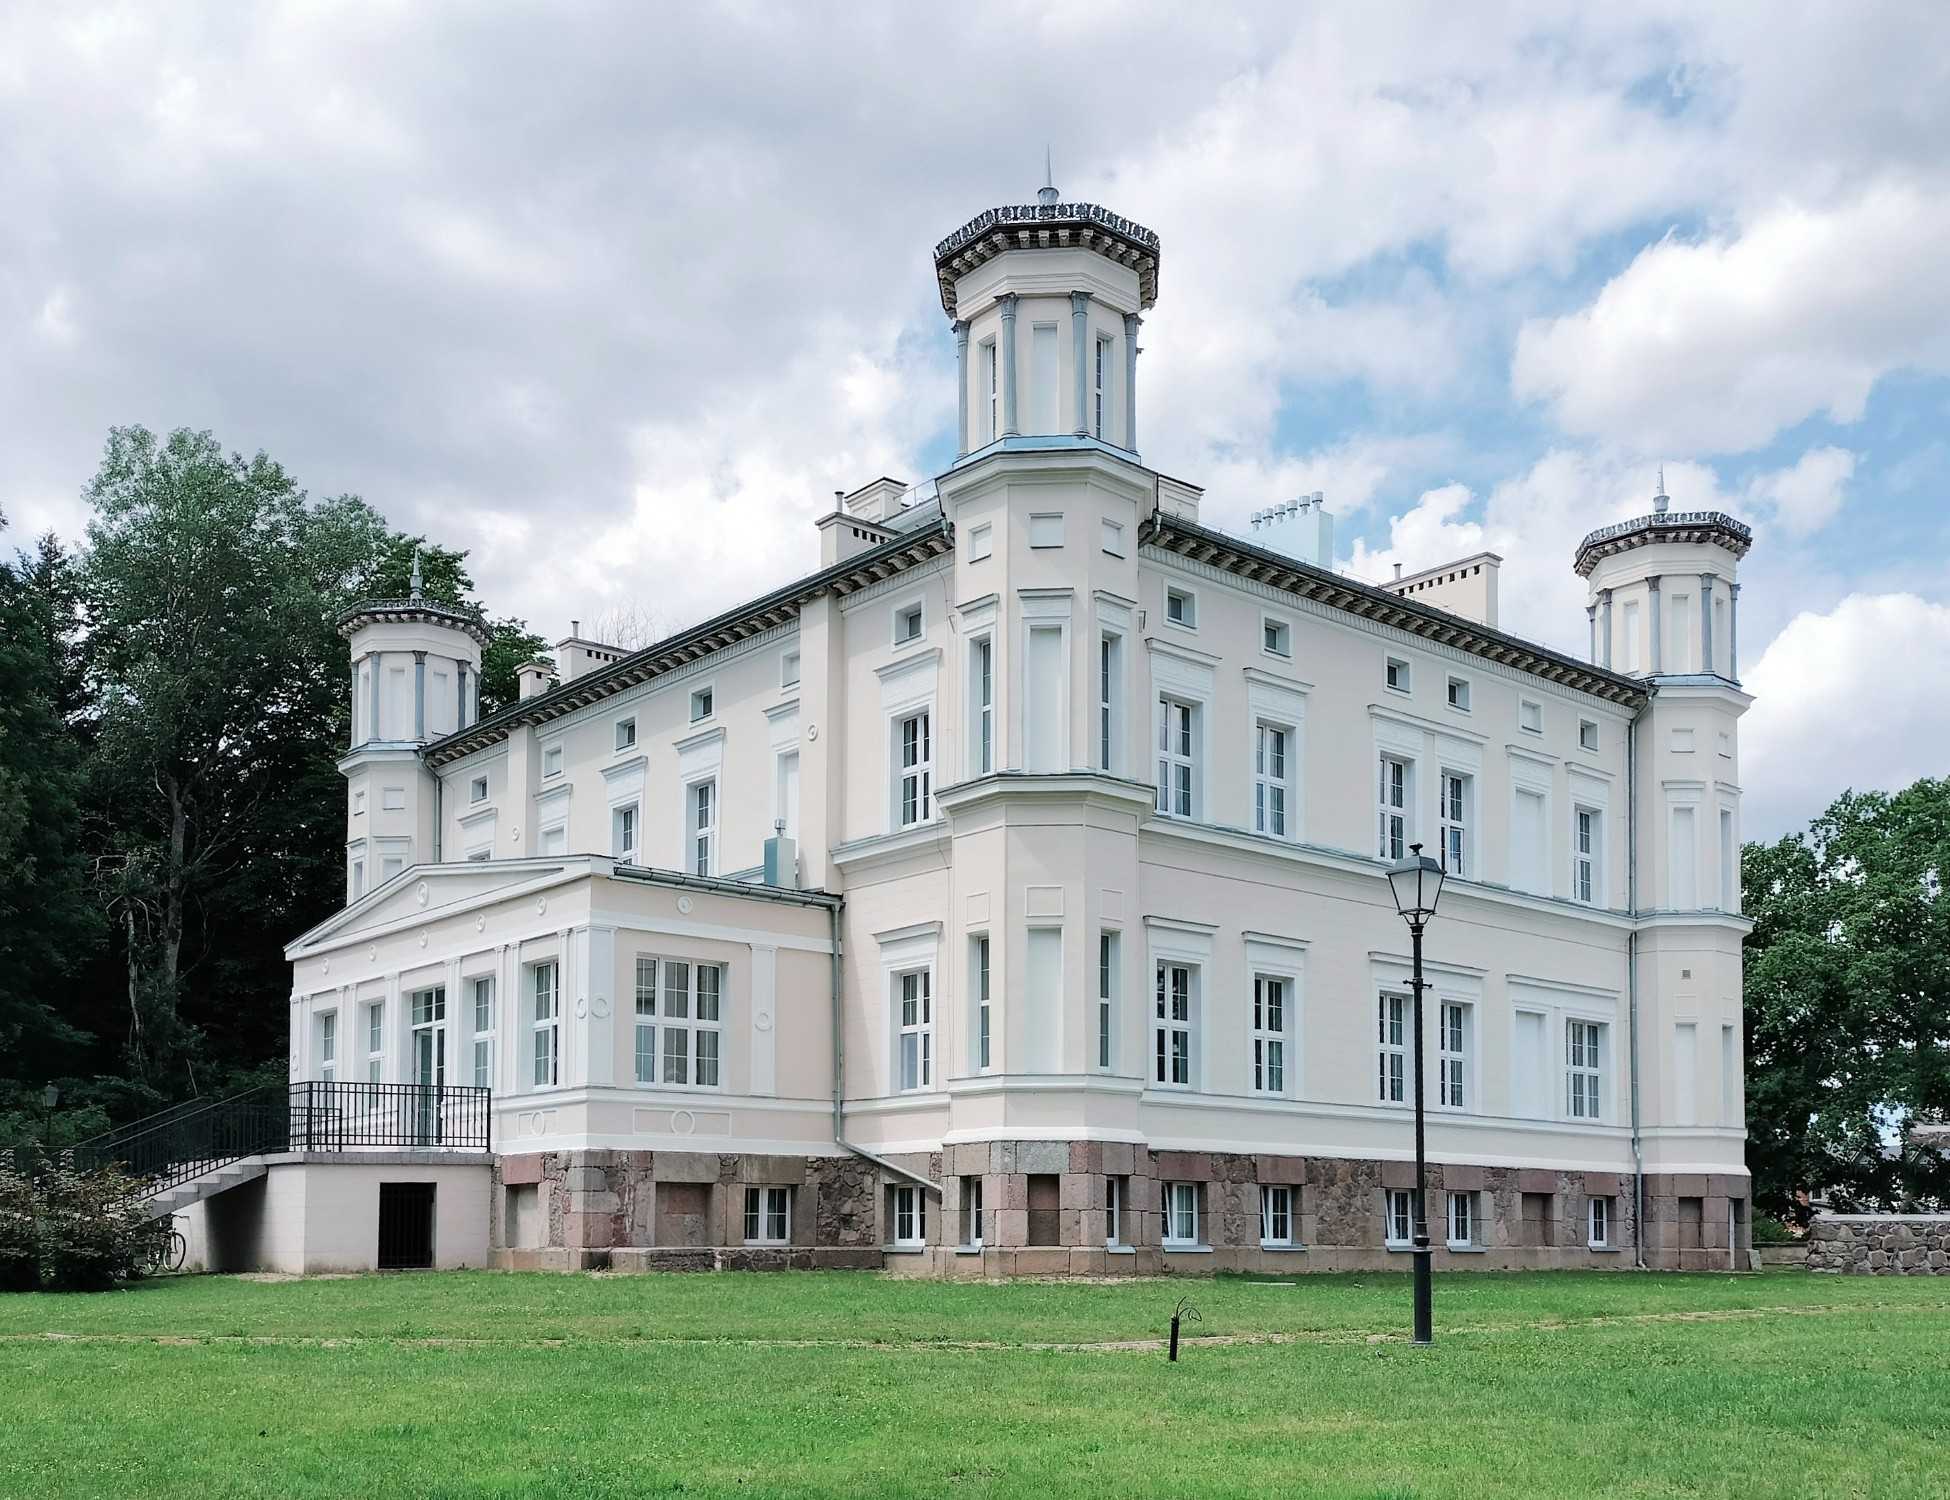 Bilder West Pomerania: Living in a palace near the Baltic Sea